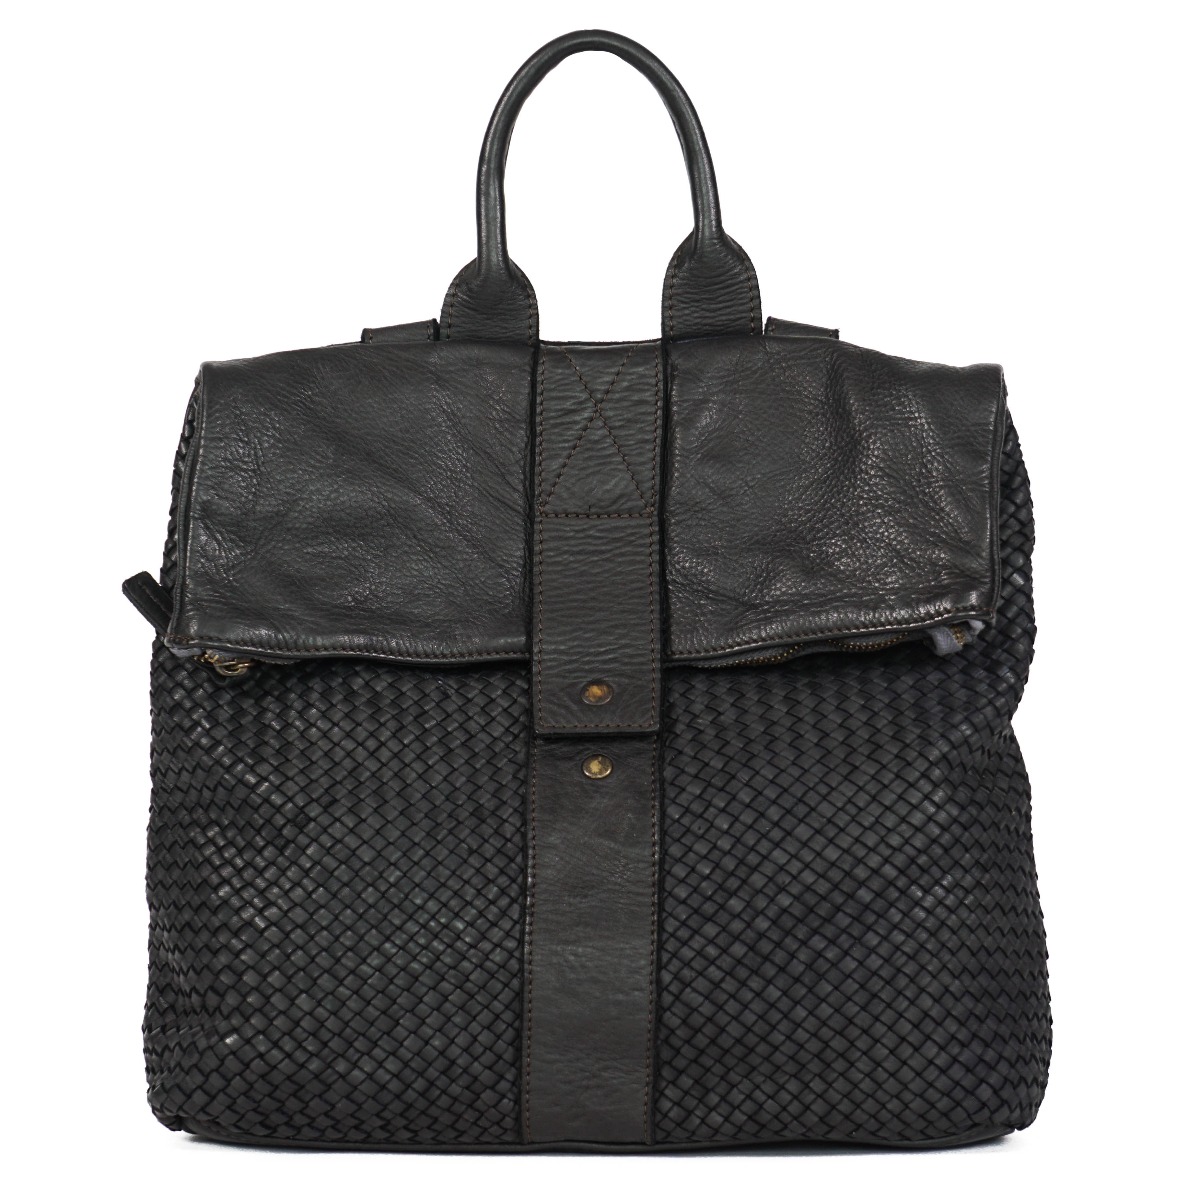 Braided leather women backpack - black